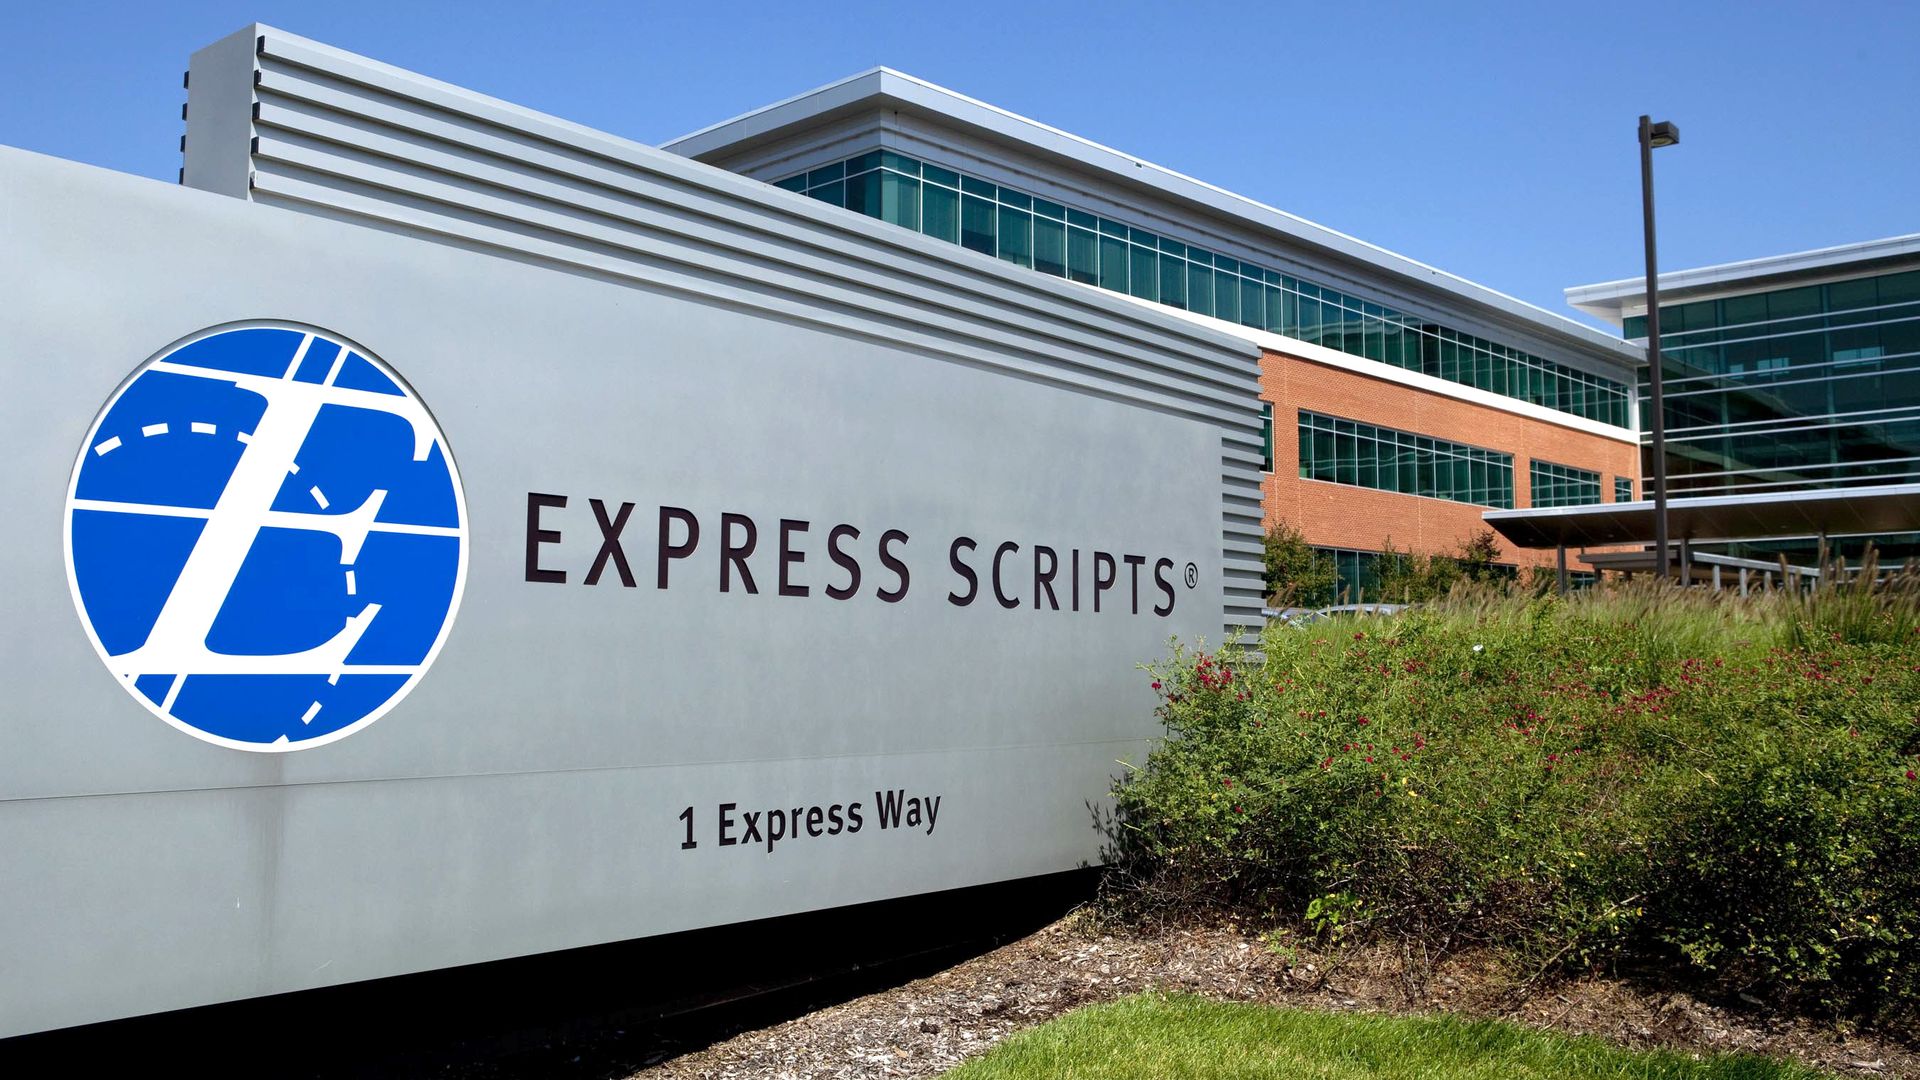 xyplorer scripts express members